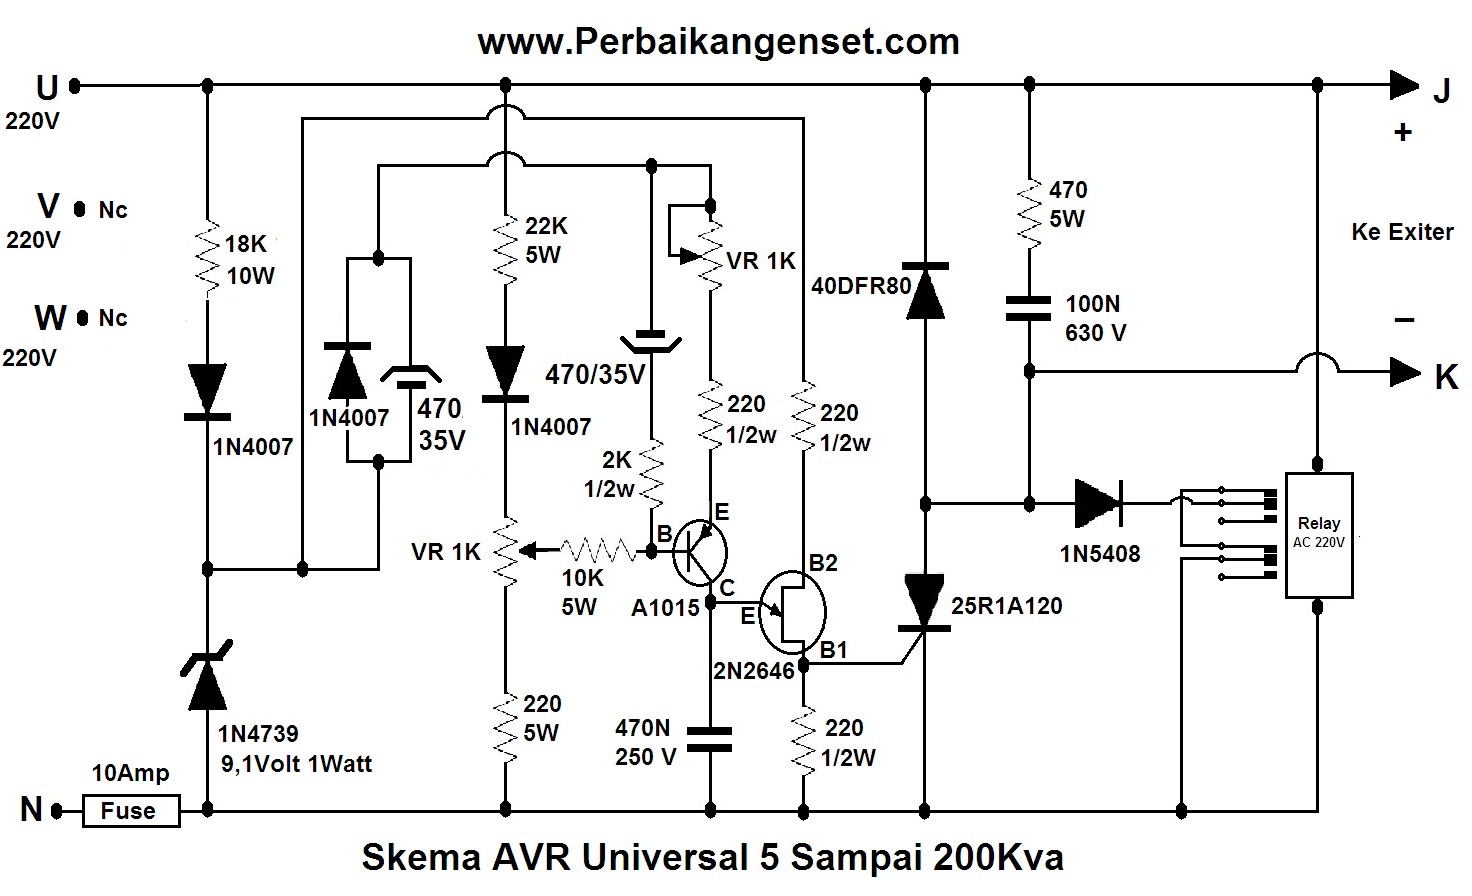 SERVICE GENSET : skema Avr Universal wiring diagram for onan genset 6 5 